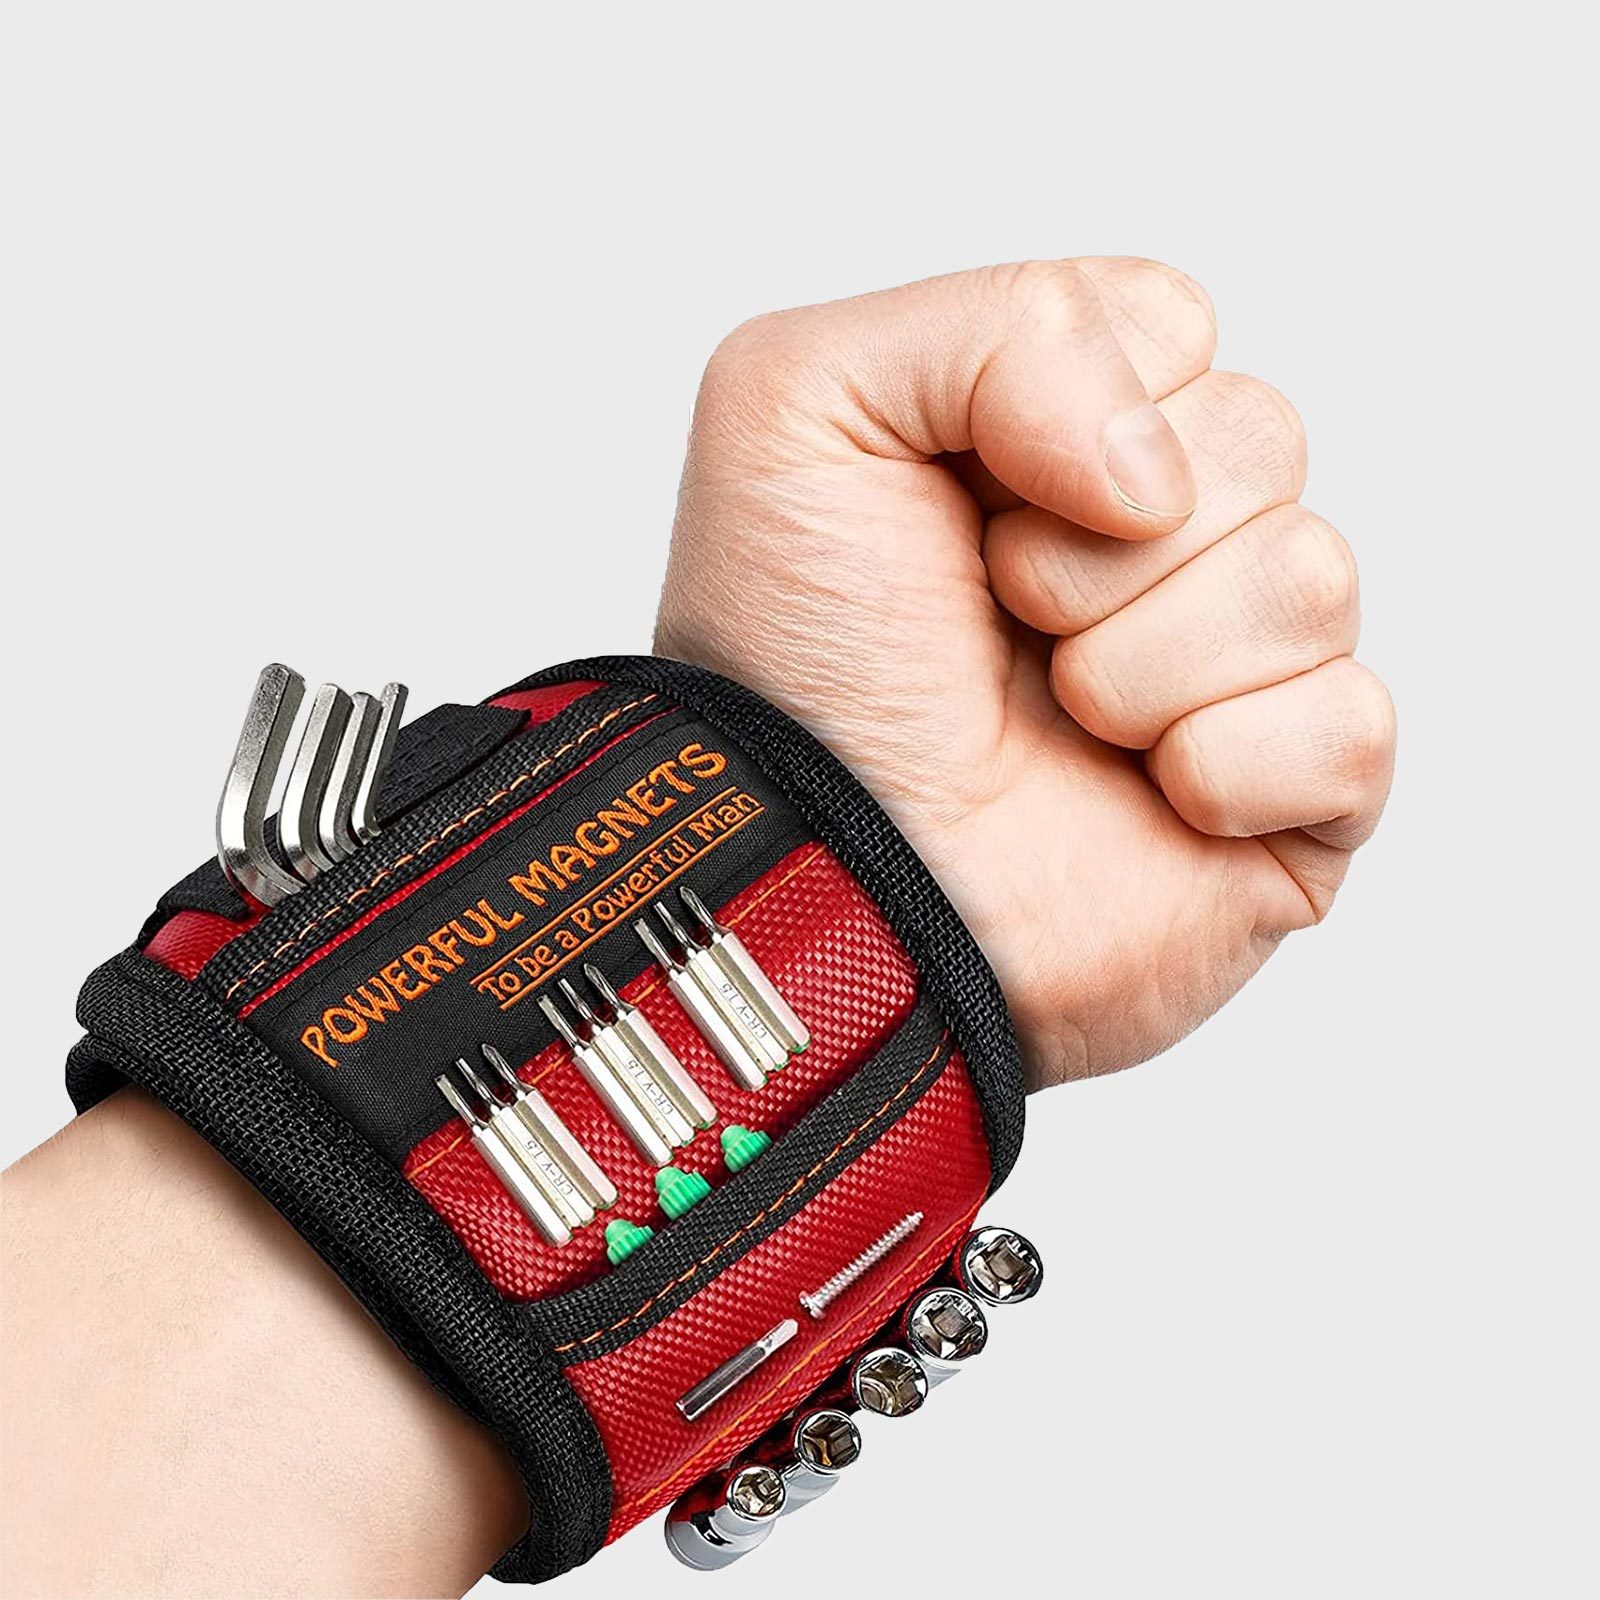 Rd Ecomm Magnetic Wristband Perfect Via Amazon.com